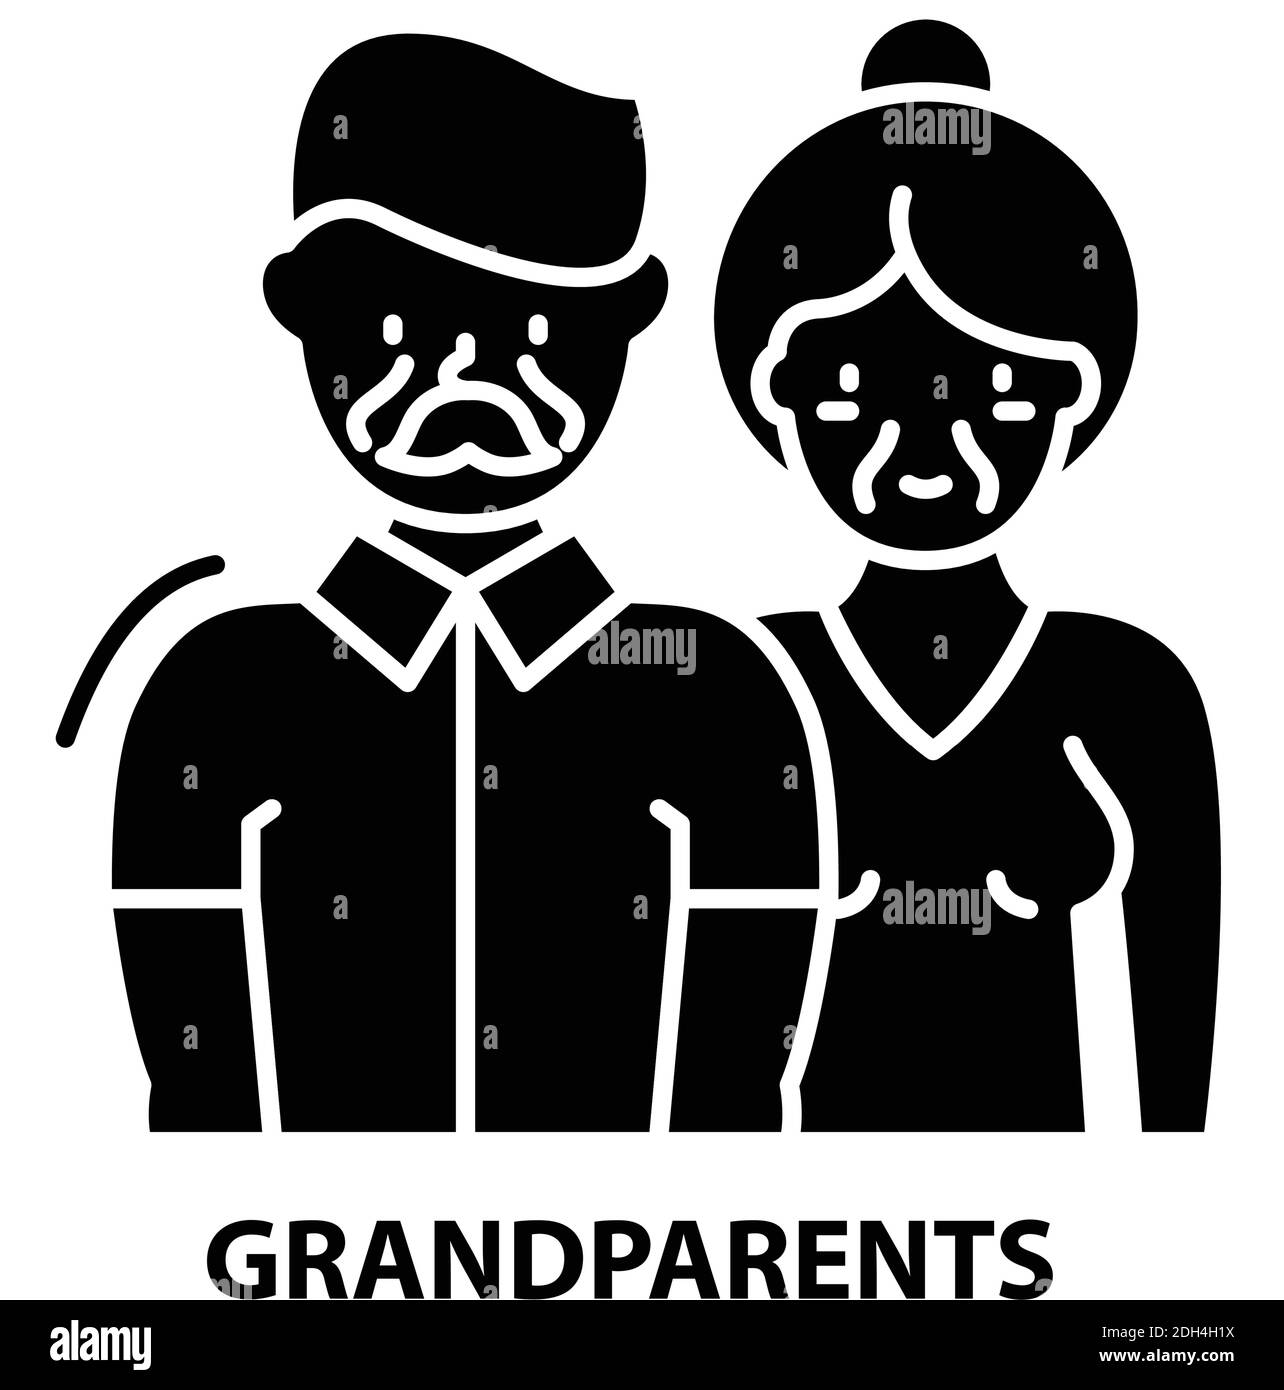 grandparents icon, black vector sign with editable strokes, concept illustration Stock Vector